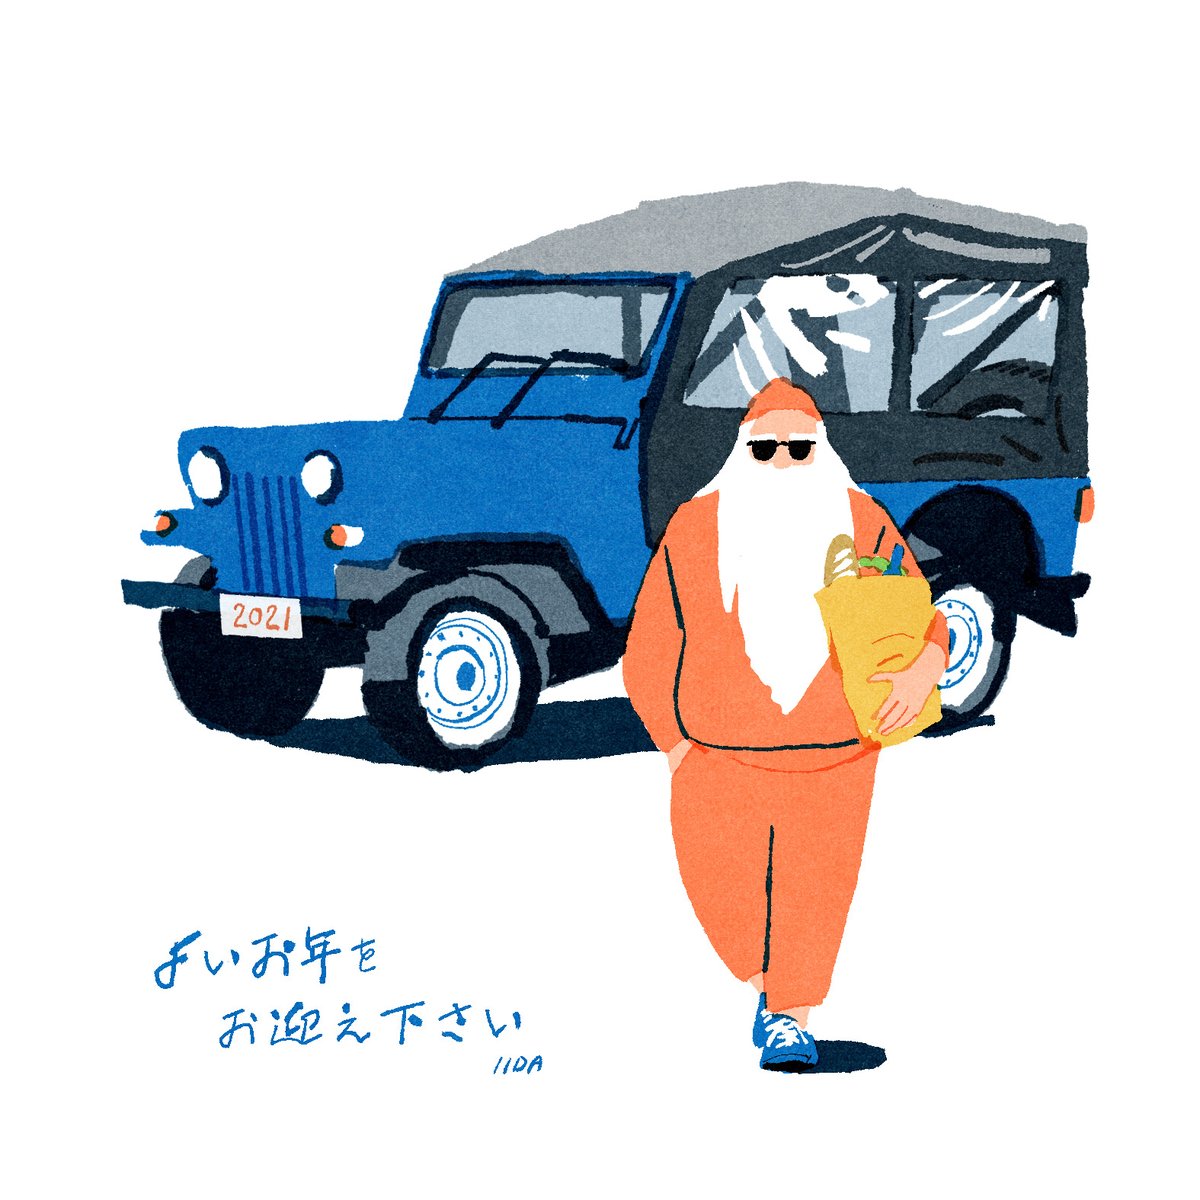 ground vehicle motor vehicle car orange pants vehicle focus bag holding bag  illustration images